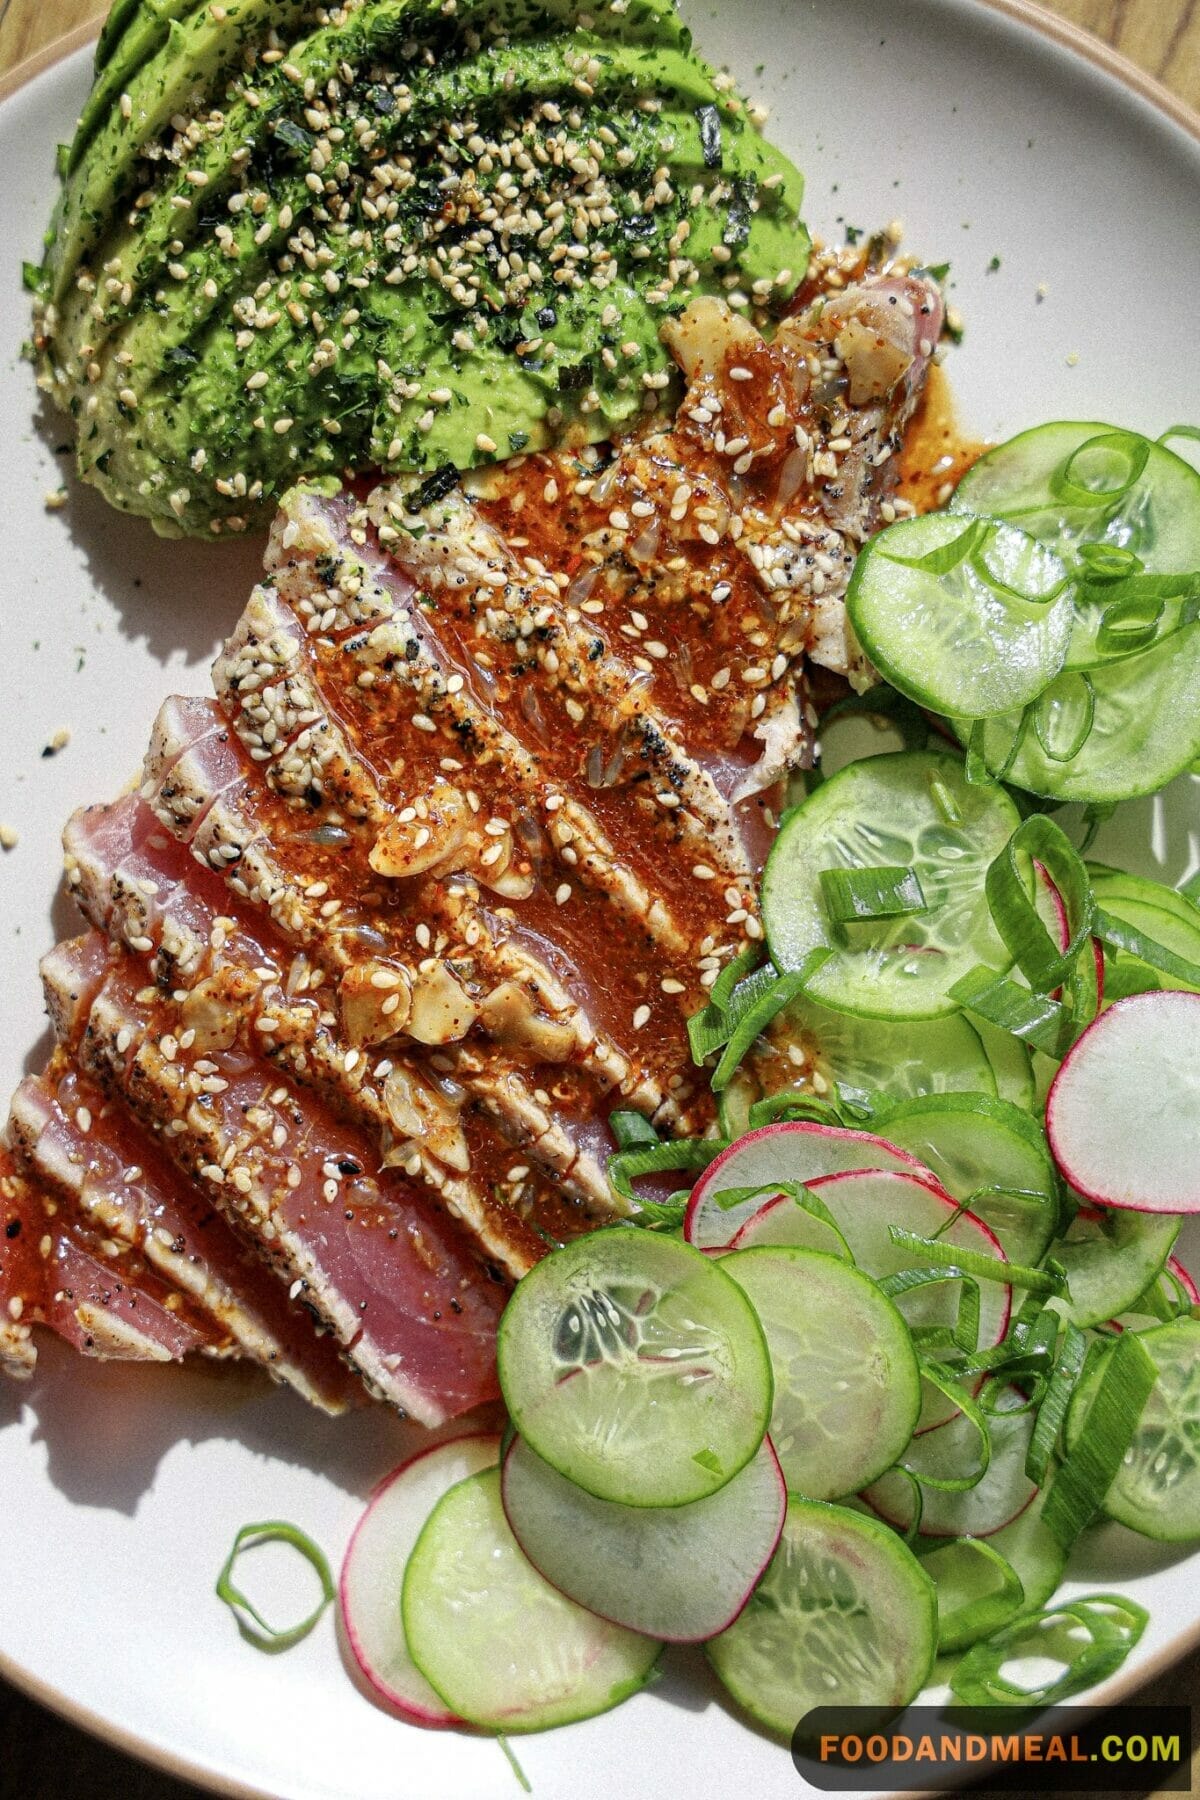  Tuna Steak with Avocado Cucumber Salad